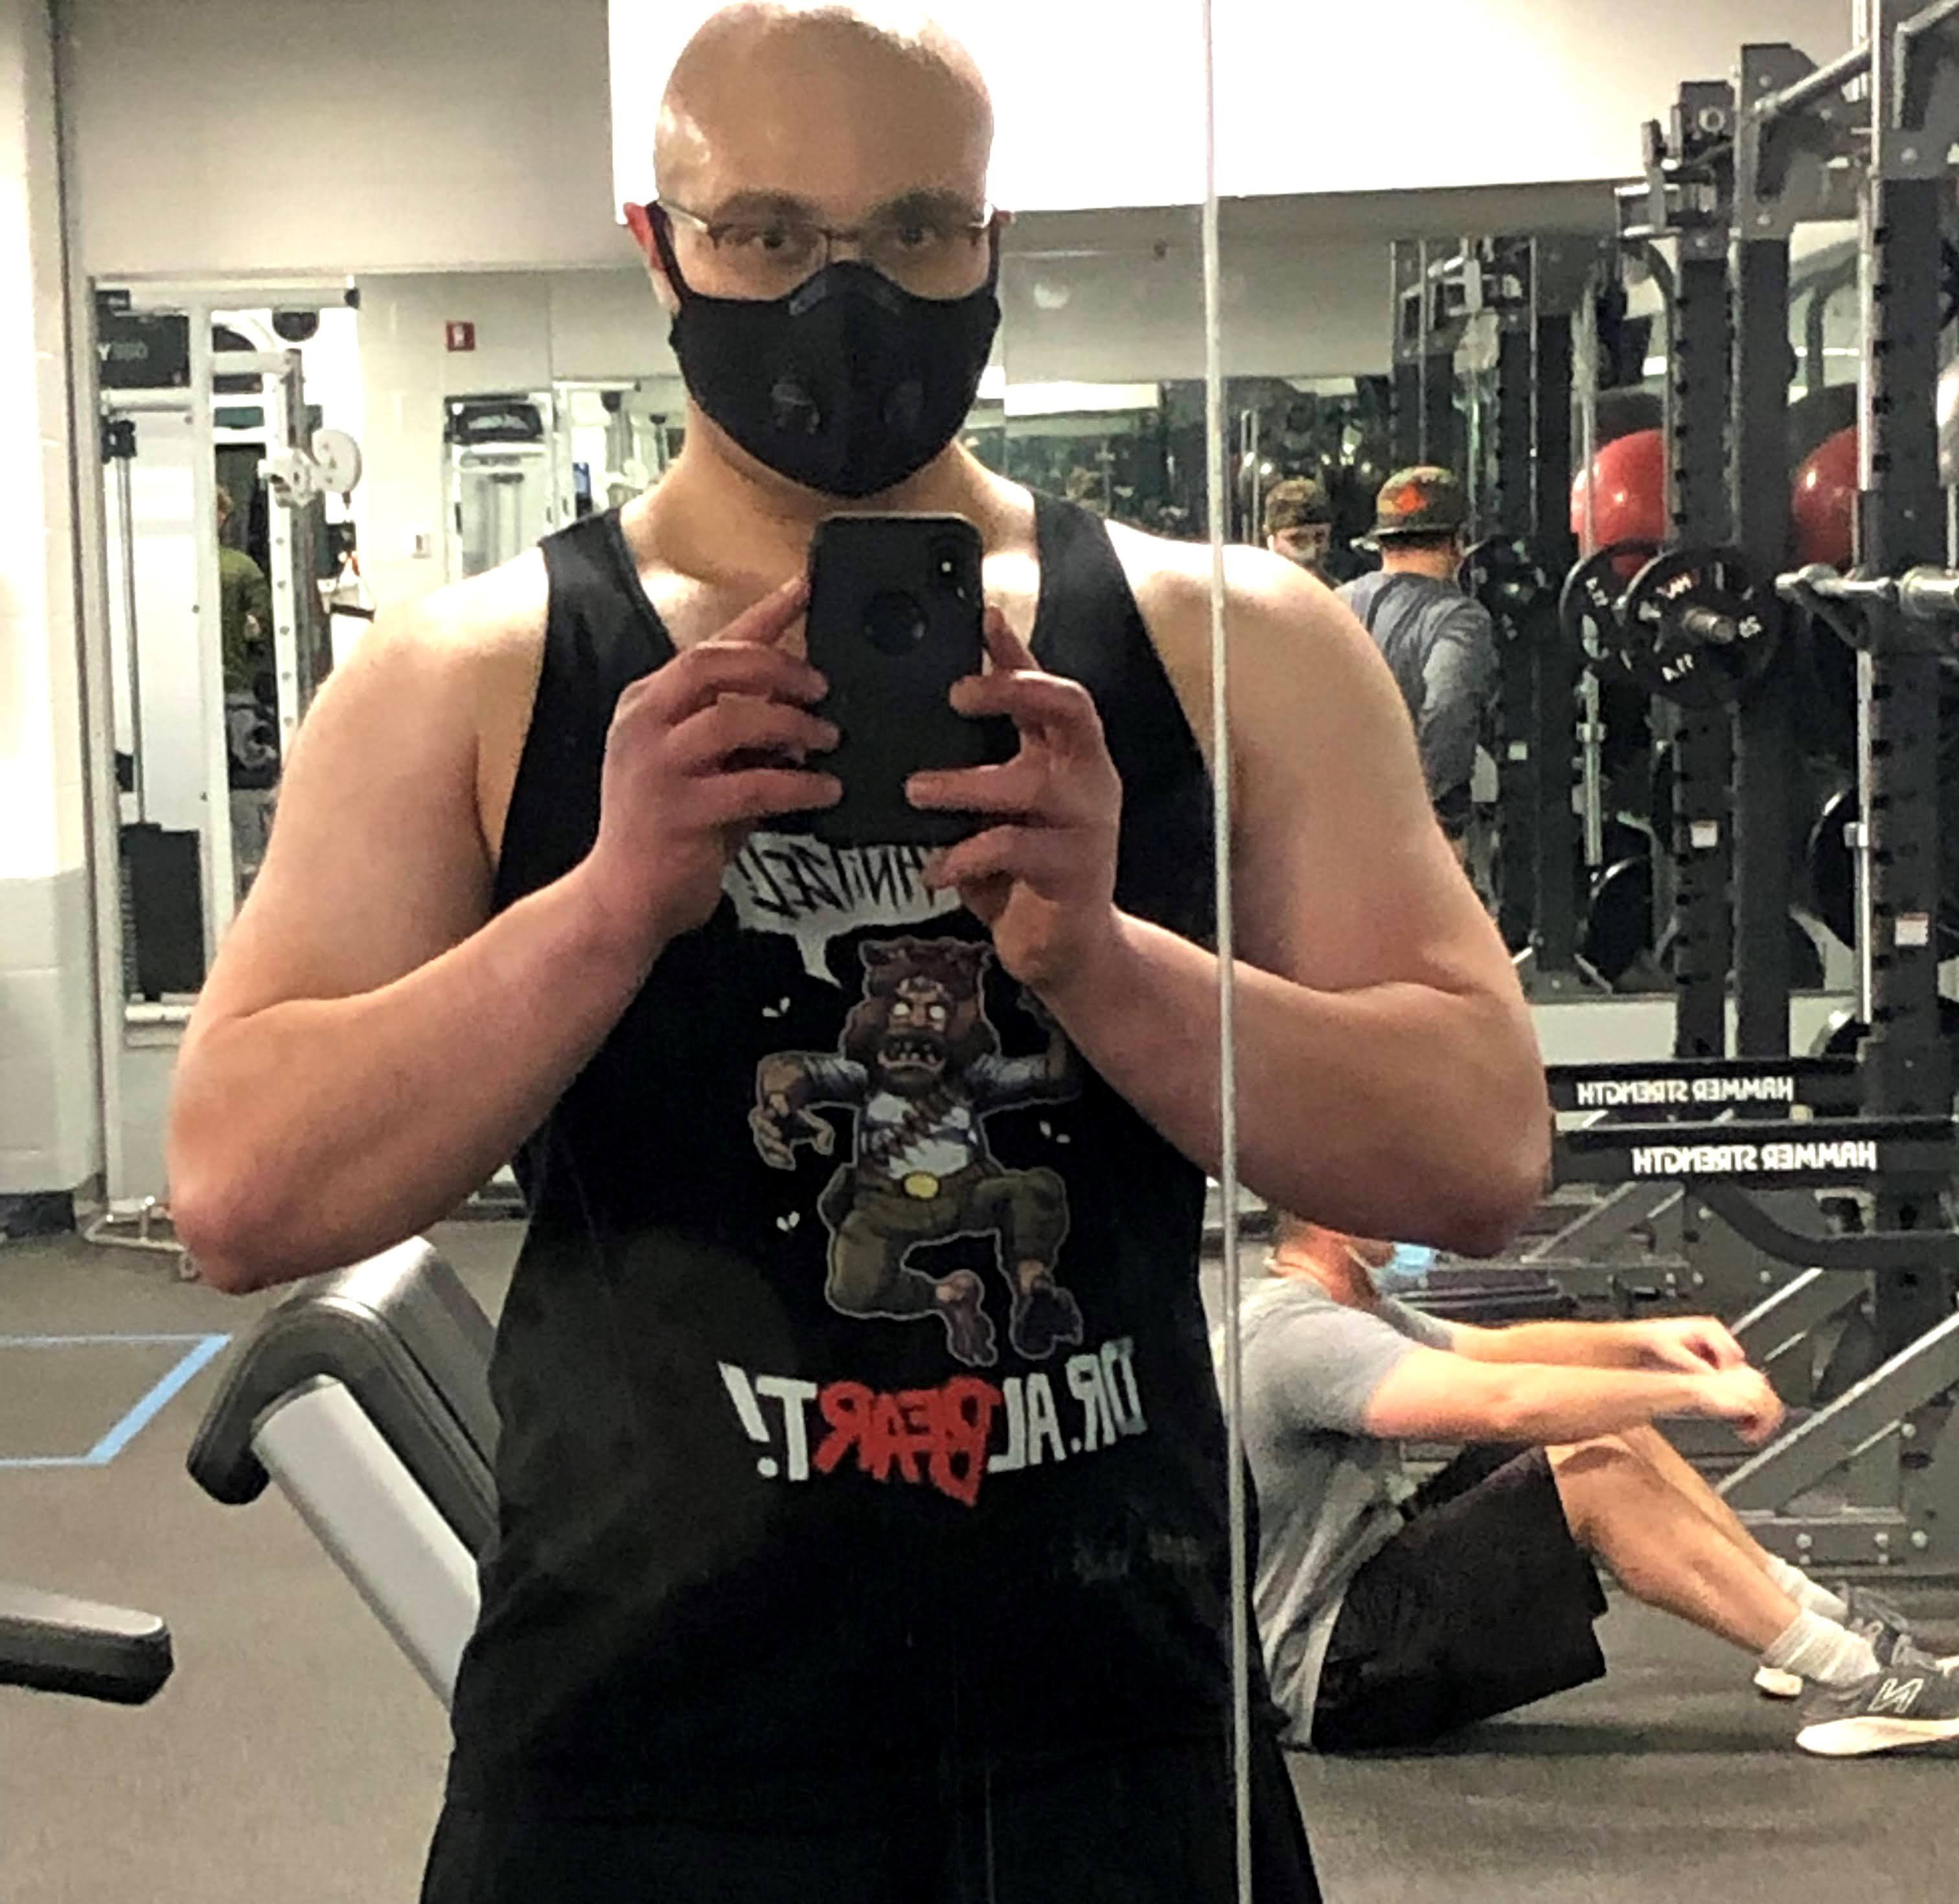 Brian in a mirror at a gym